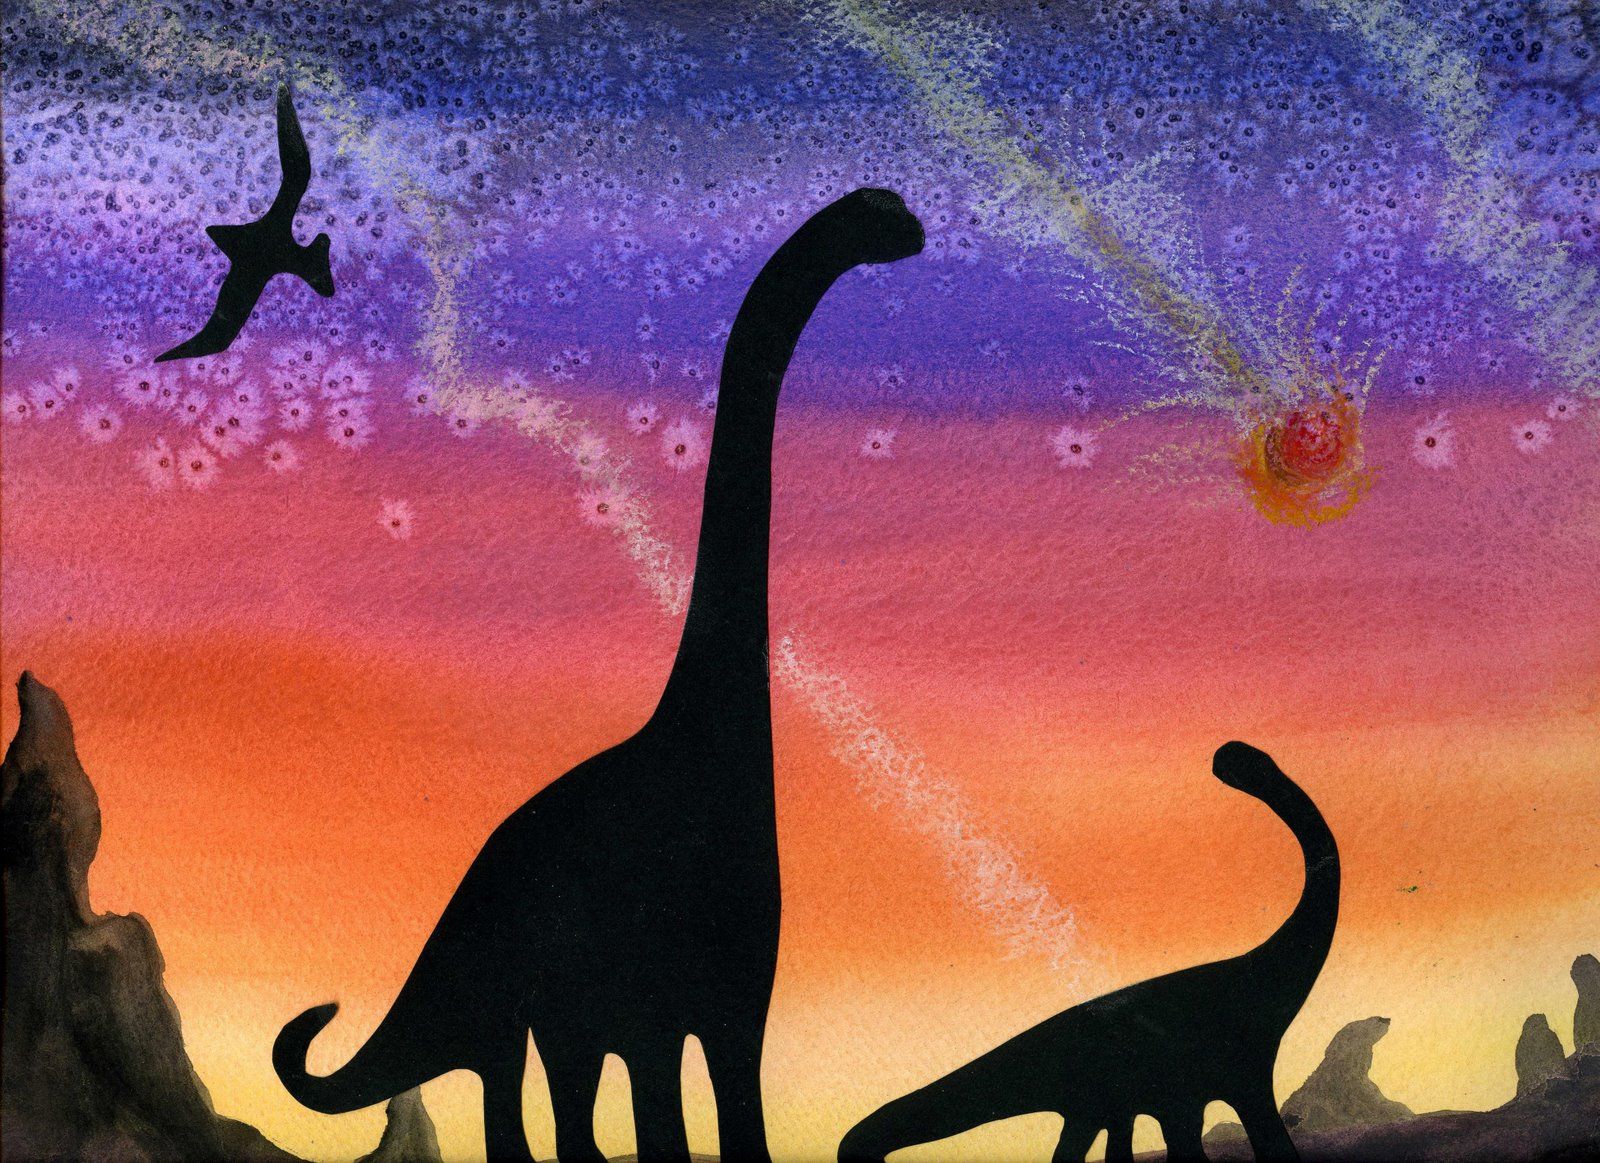 Canvas Set Dinosaur